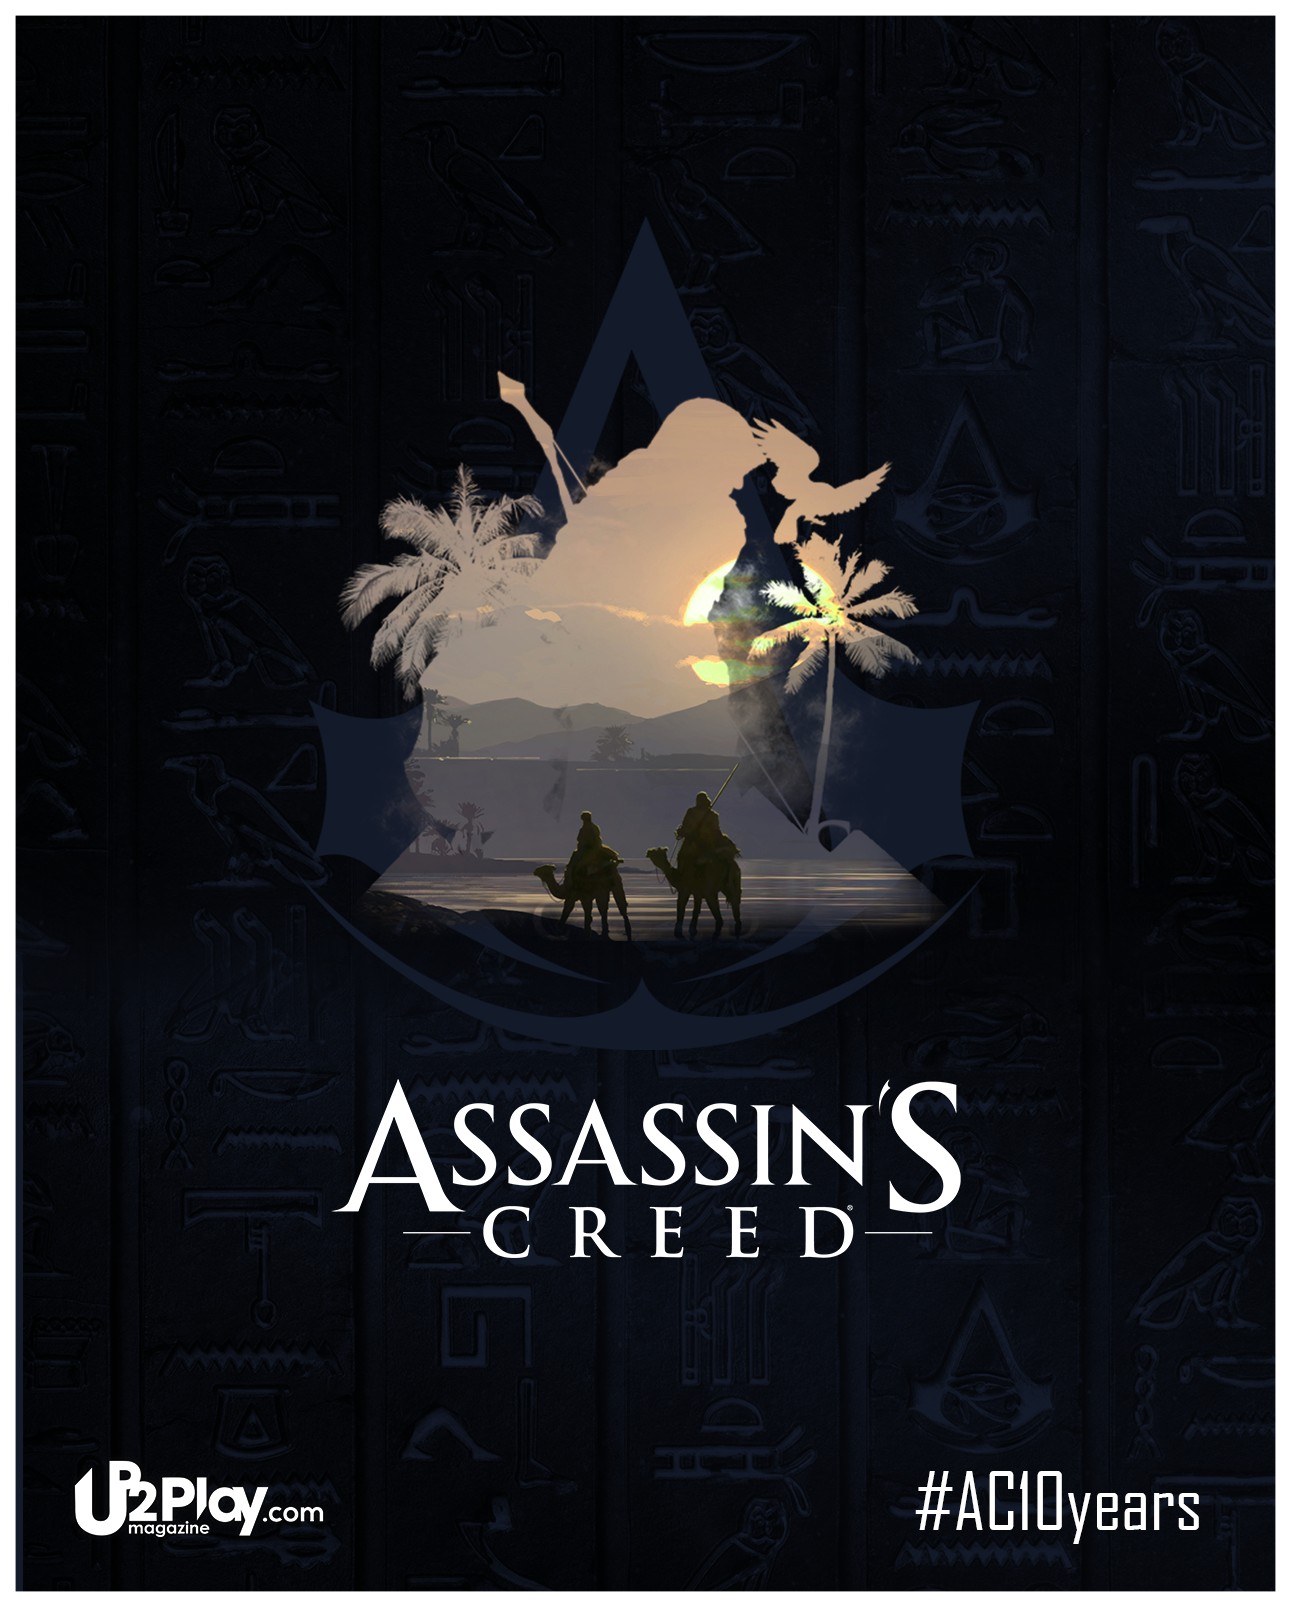 Assassins Creed, Assassins Creed: Brotherhood, Assassin&039;s Creed:  Unity, Assassin&039;s Creed Syndicate, Video games, Ultra  HD, Digital prints, Ubisoft, Ubi30, Windows 10 Anniversary Wallpaper